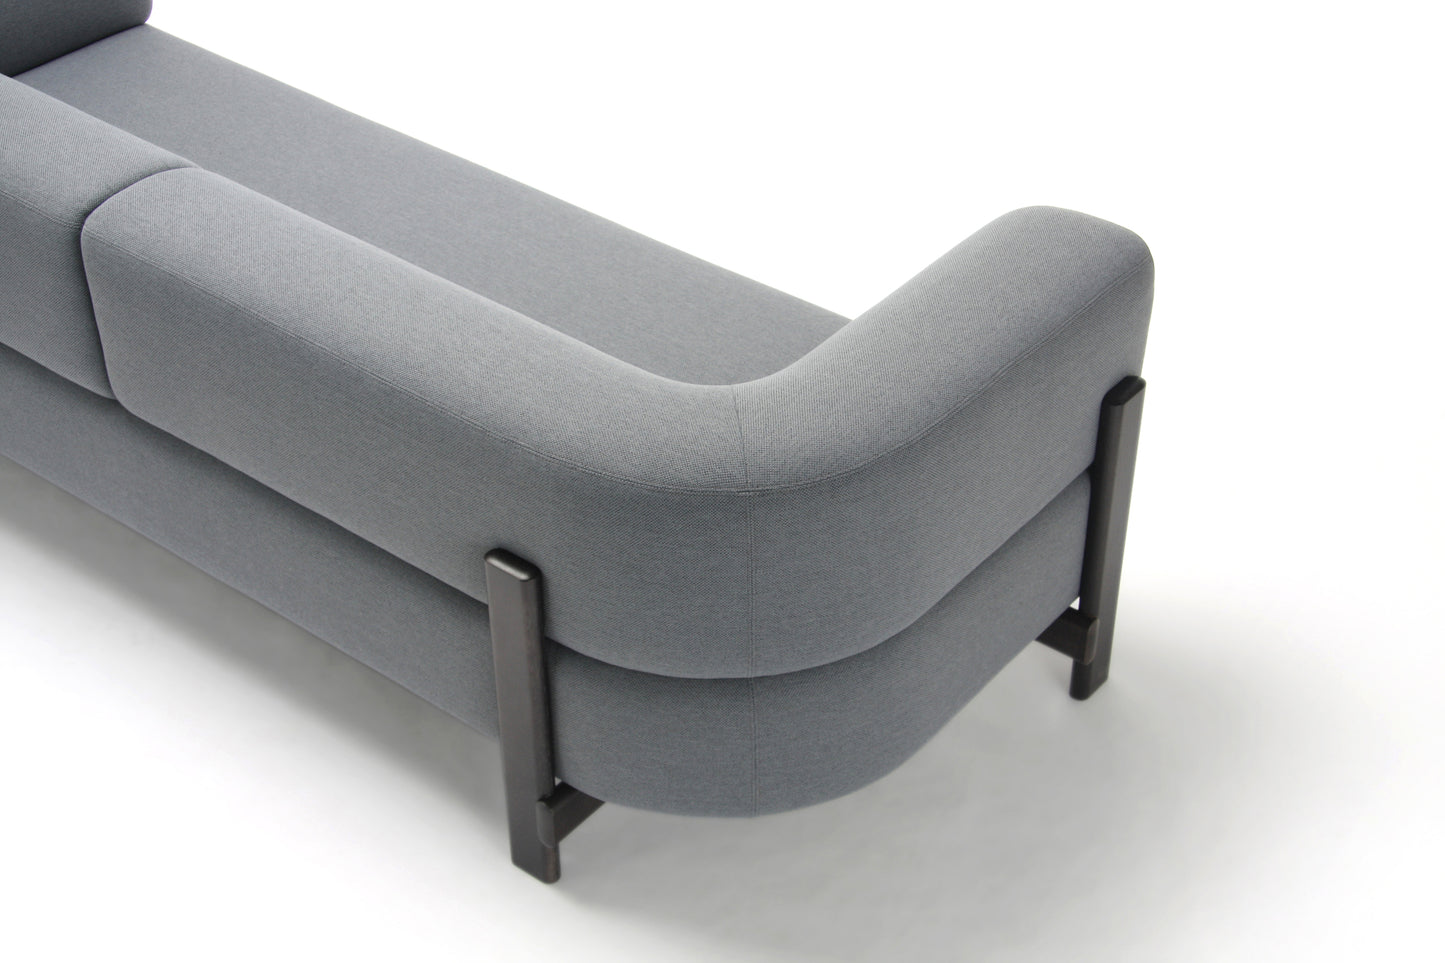 Elephant Sofa 3-Seater | エレファントソファ 3シーター